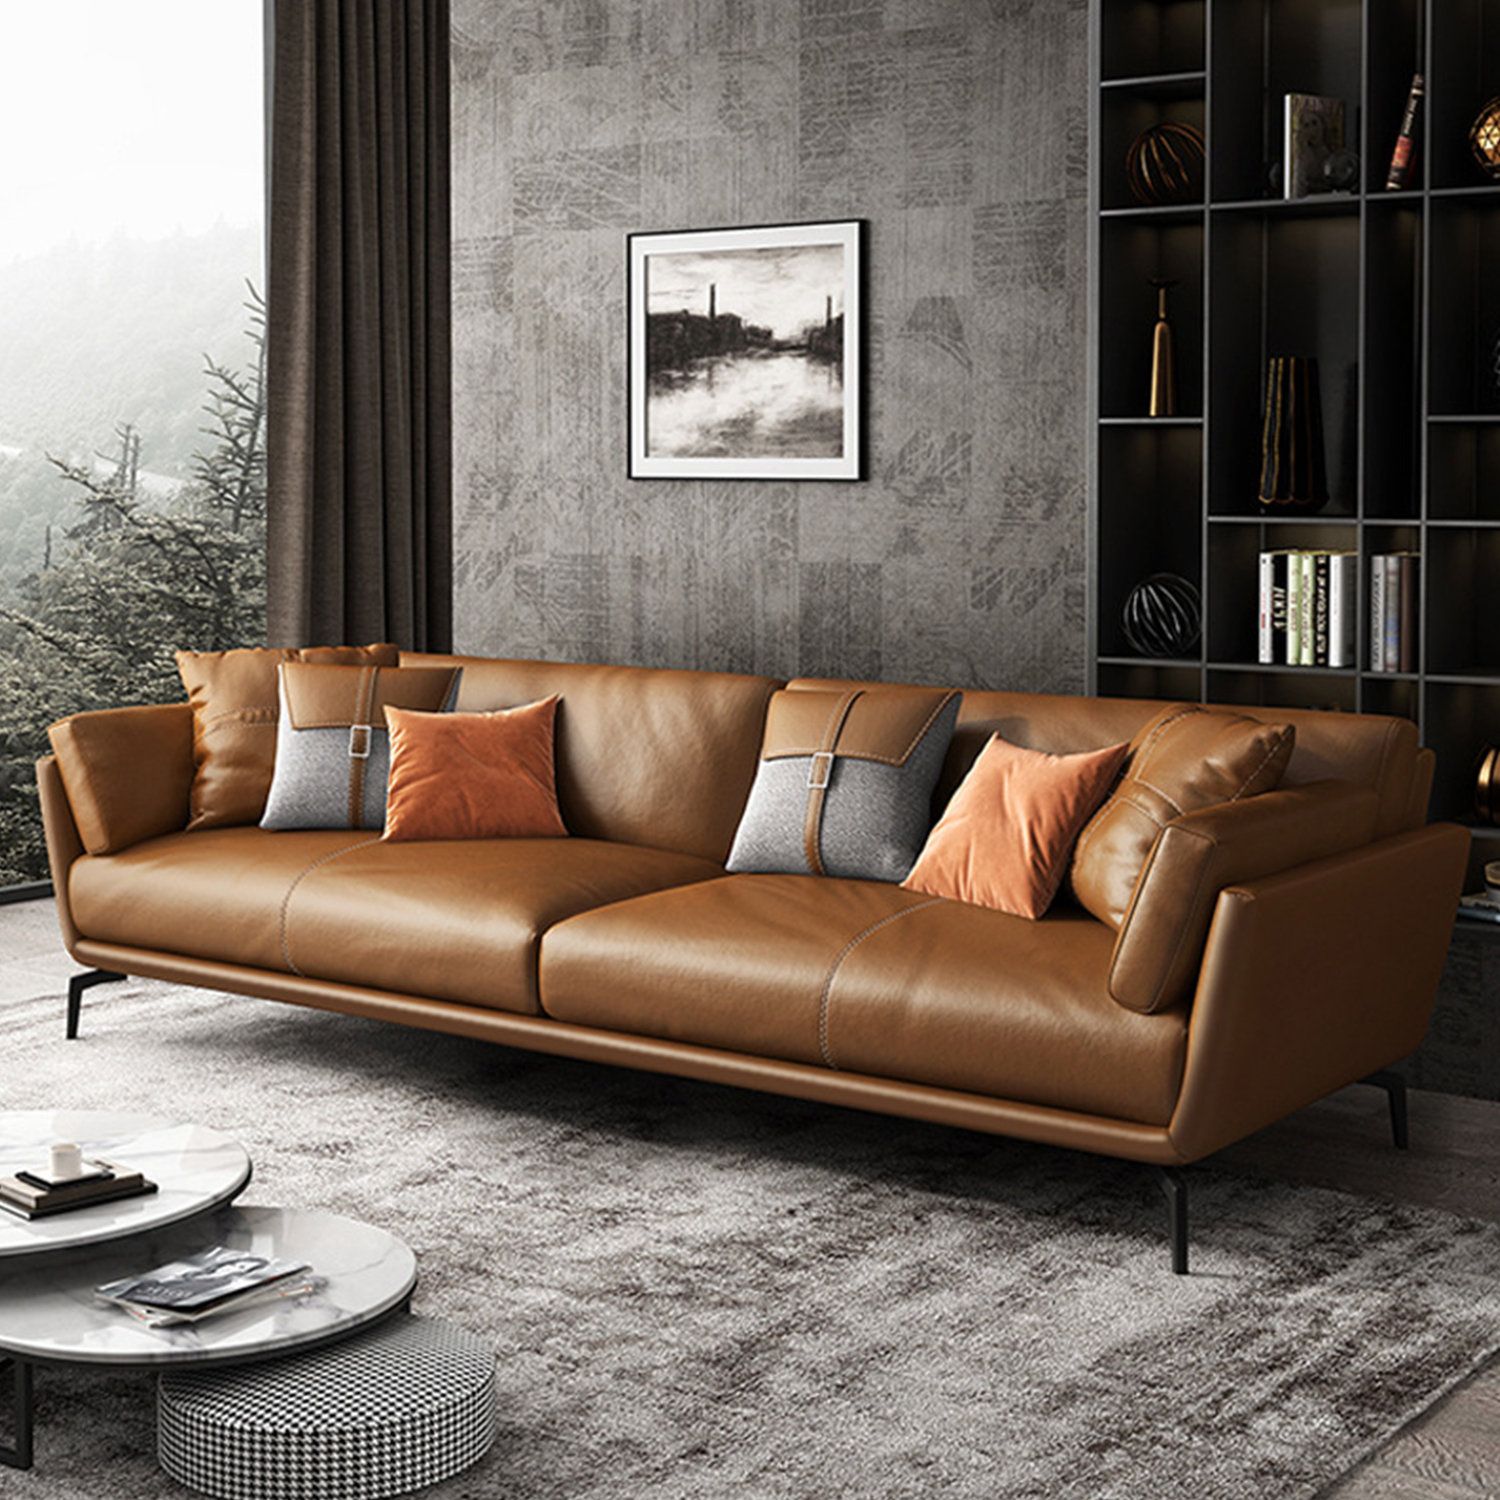 Corrigan Studio® Italian Minimalist 78.74"Cowhide Genuine Leather Orange 3 Seat  Sofa For Living Room & Reviews | Wayfair Throughout Modern 3 Seater Sofas (Photo 9 of 15)